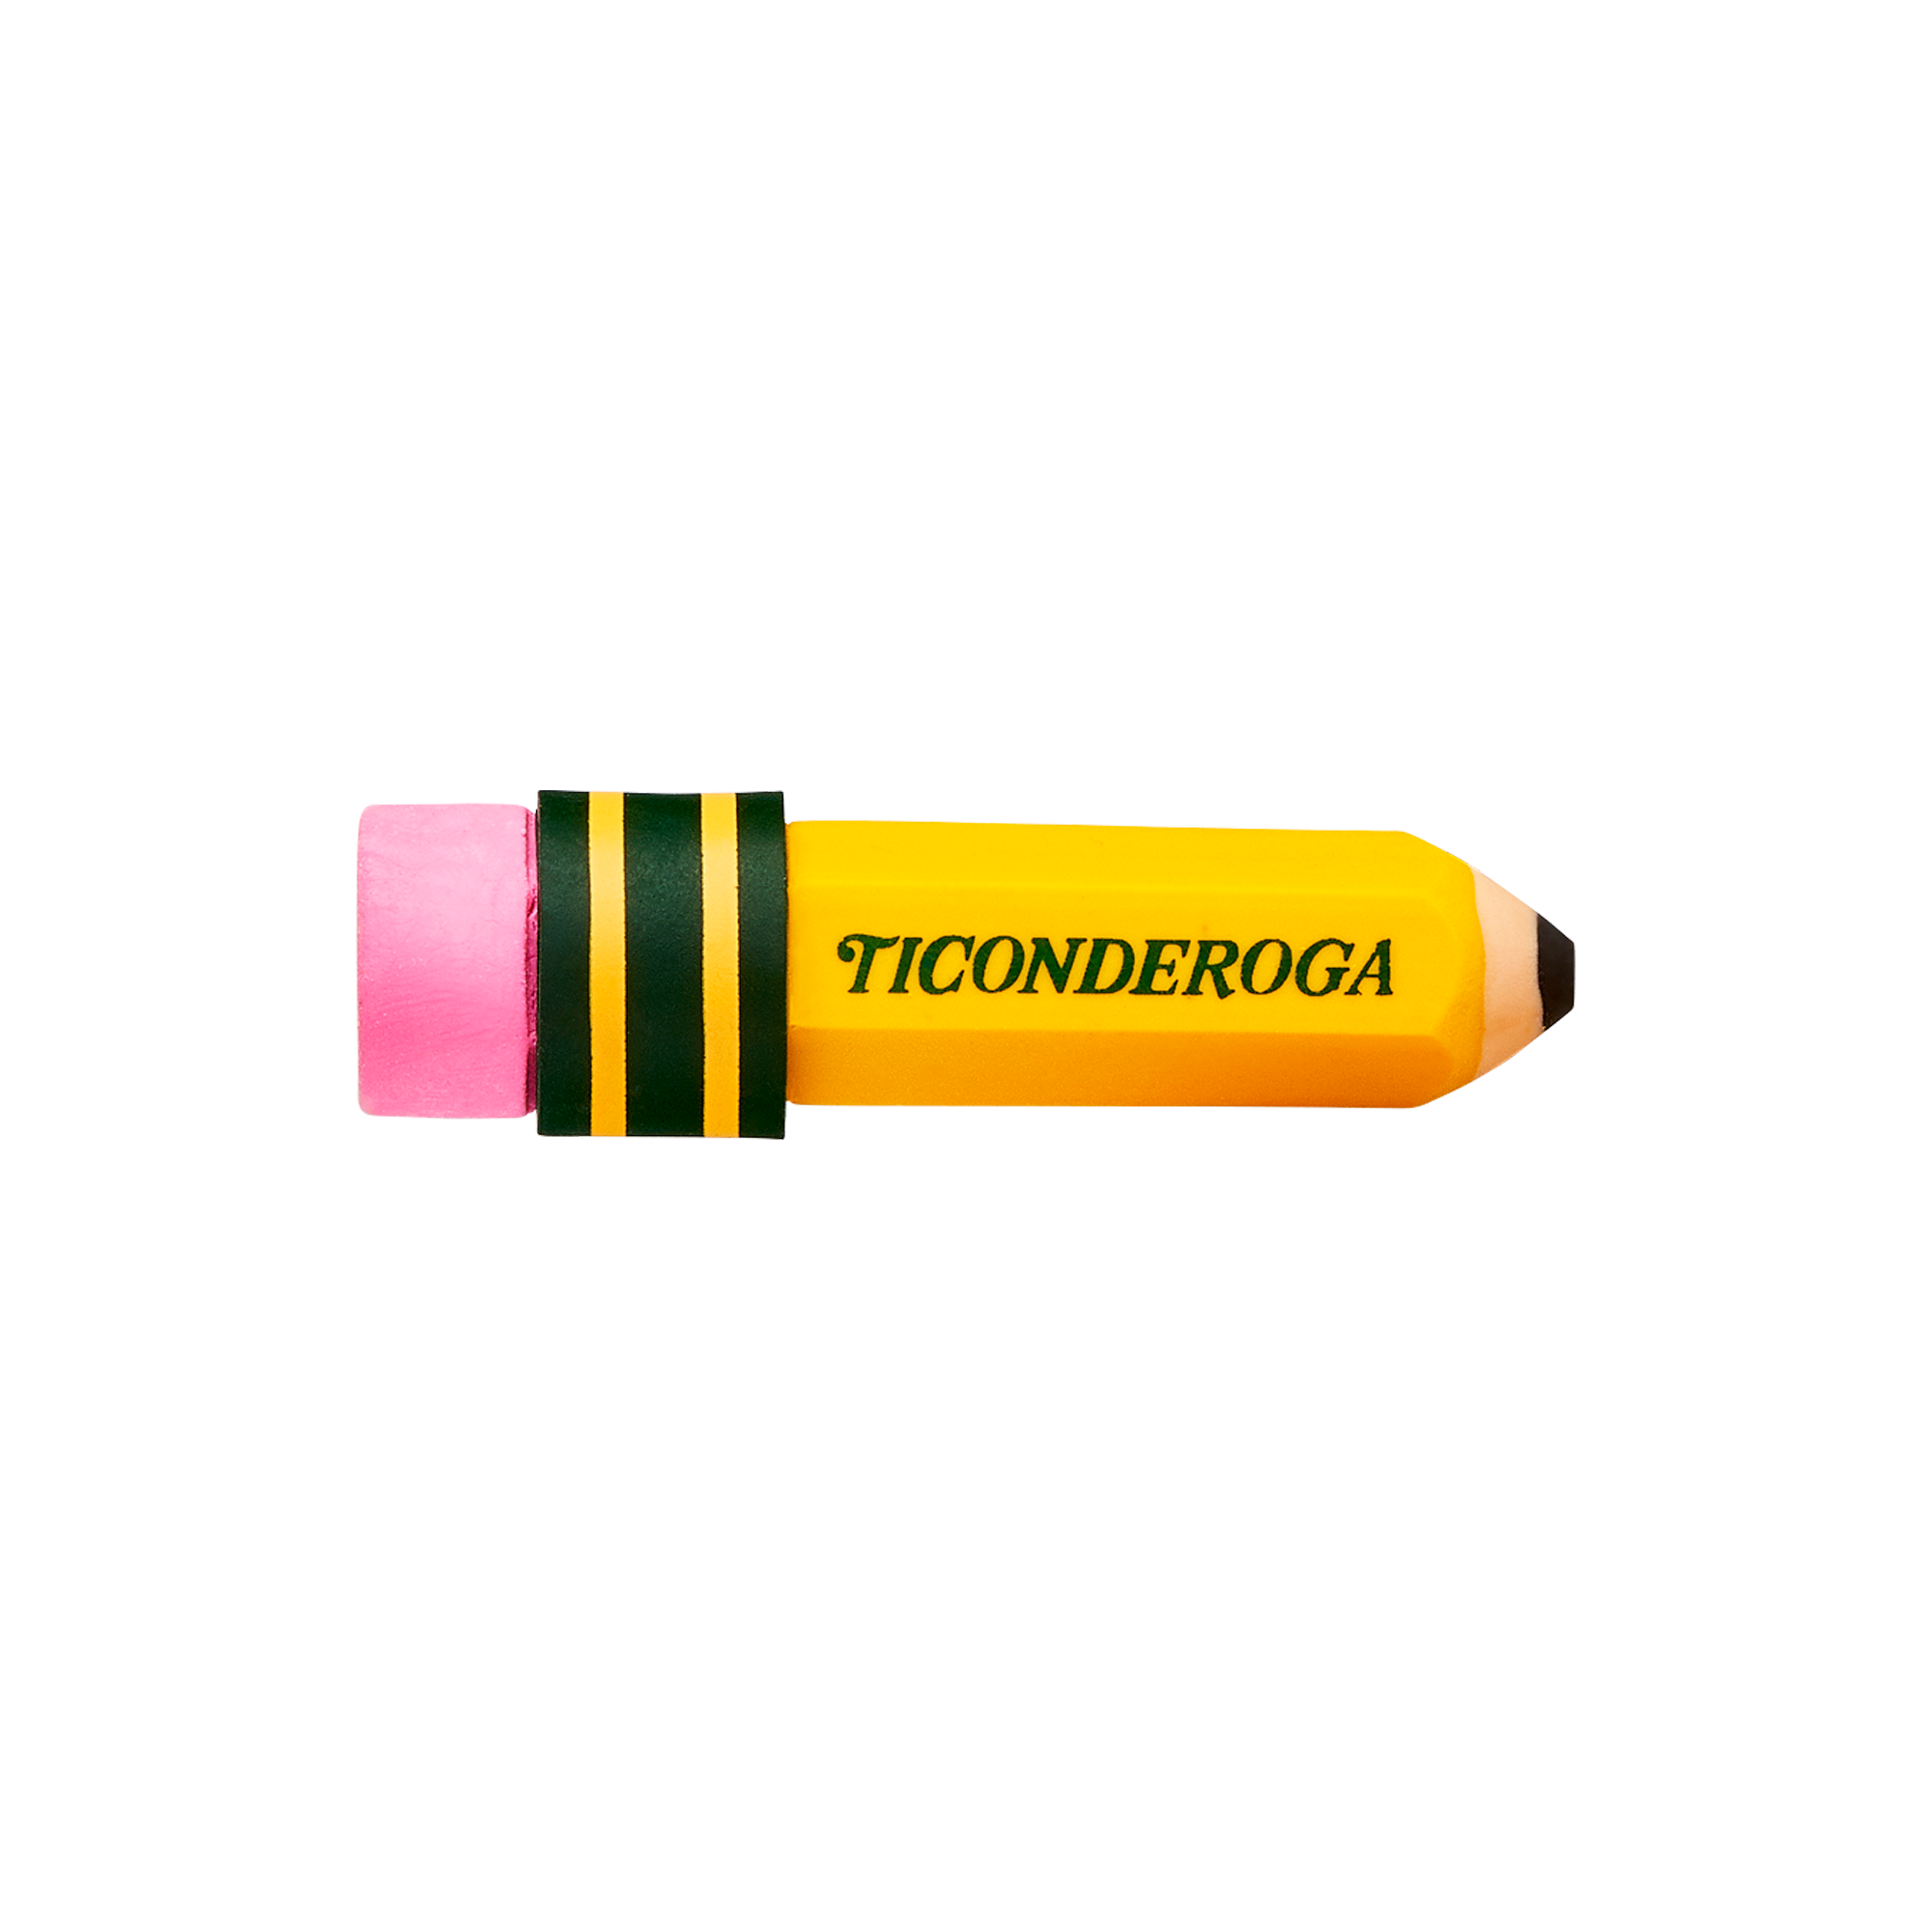 Ticonderoga Pencil-Shaped Erasers {3 pack}